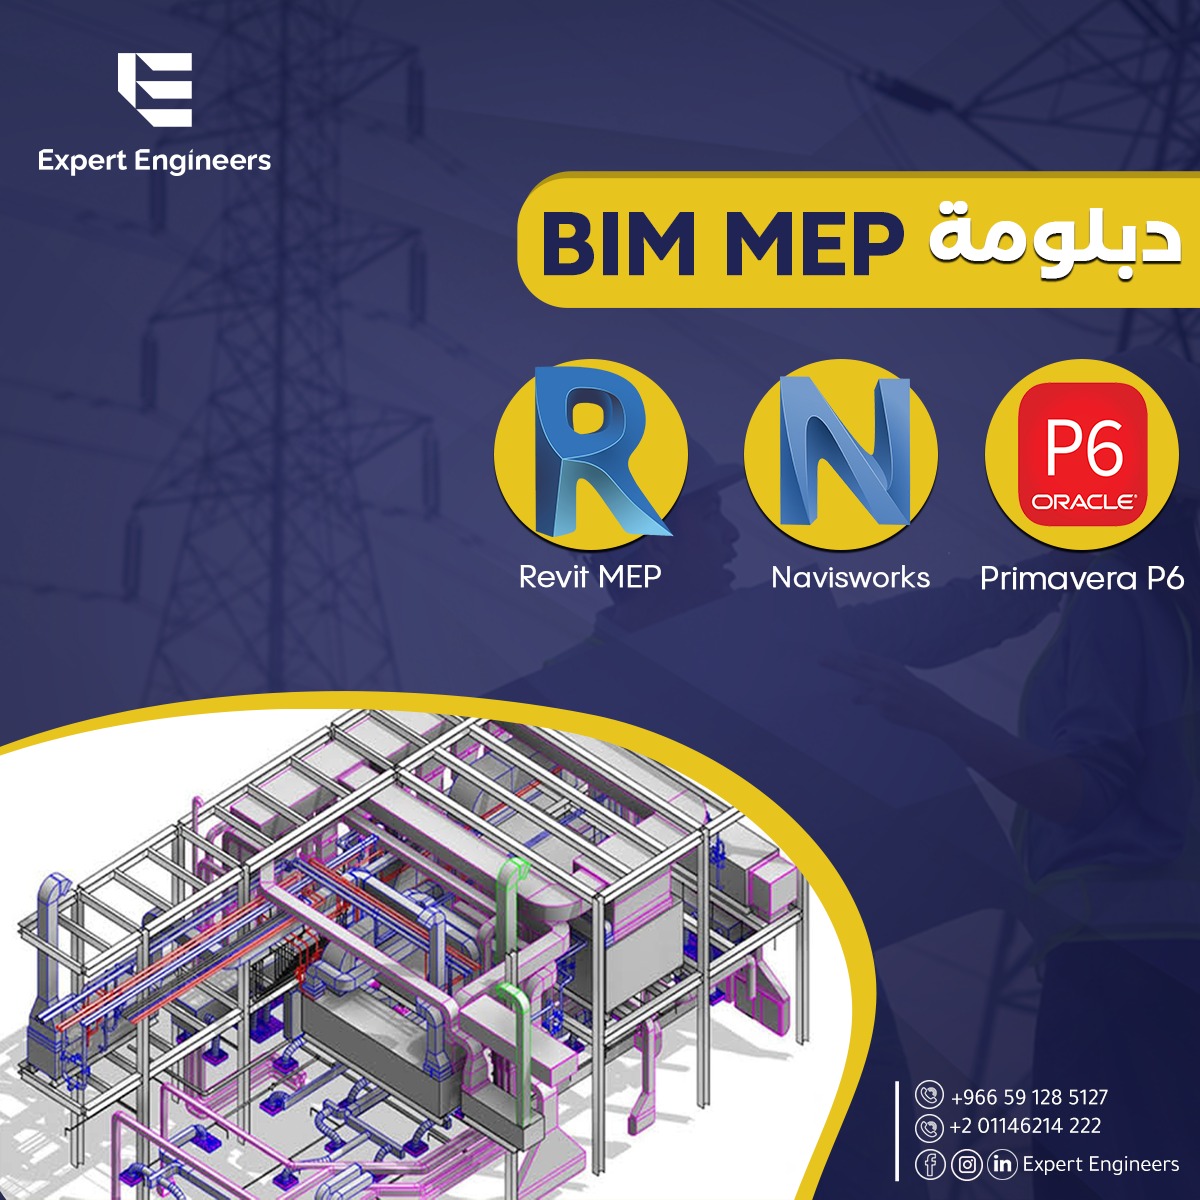 BIM And Project Management MEP